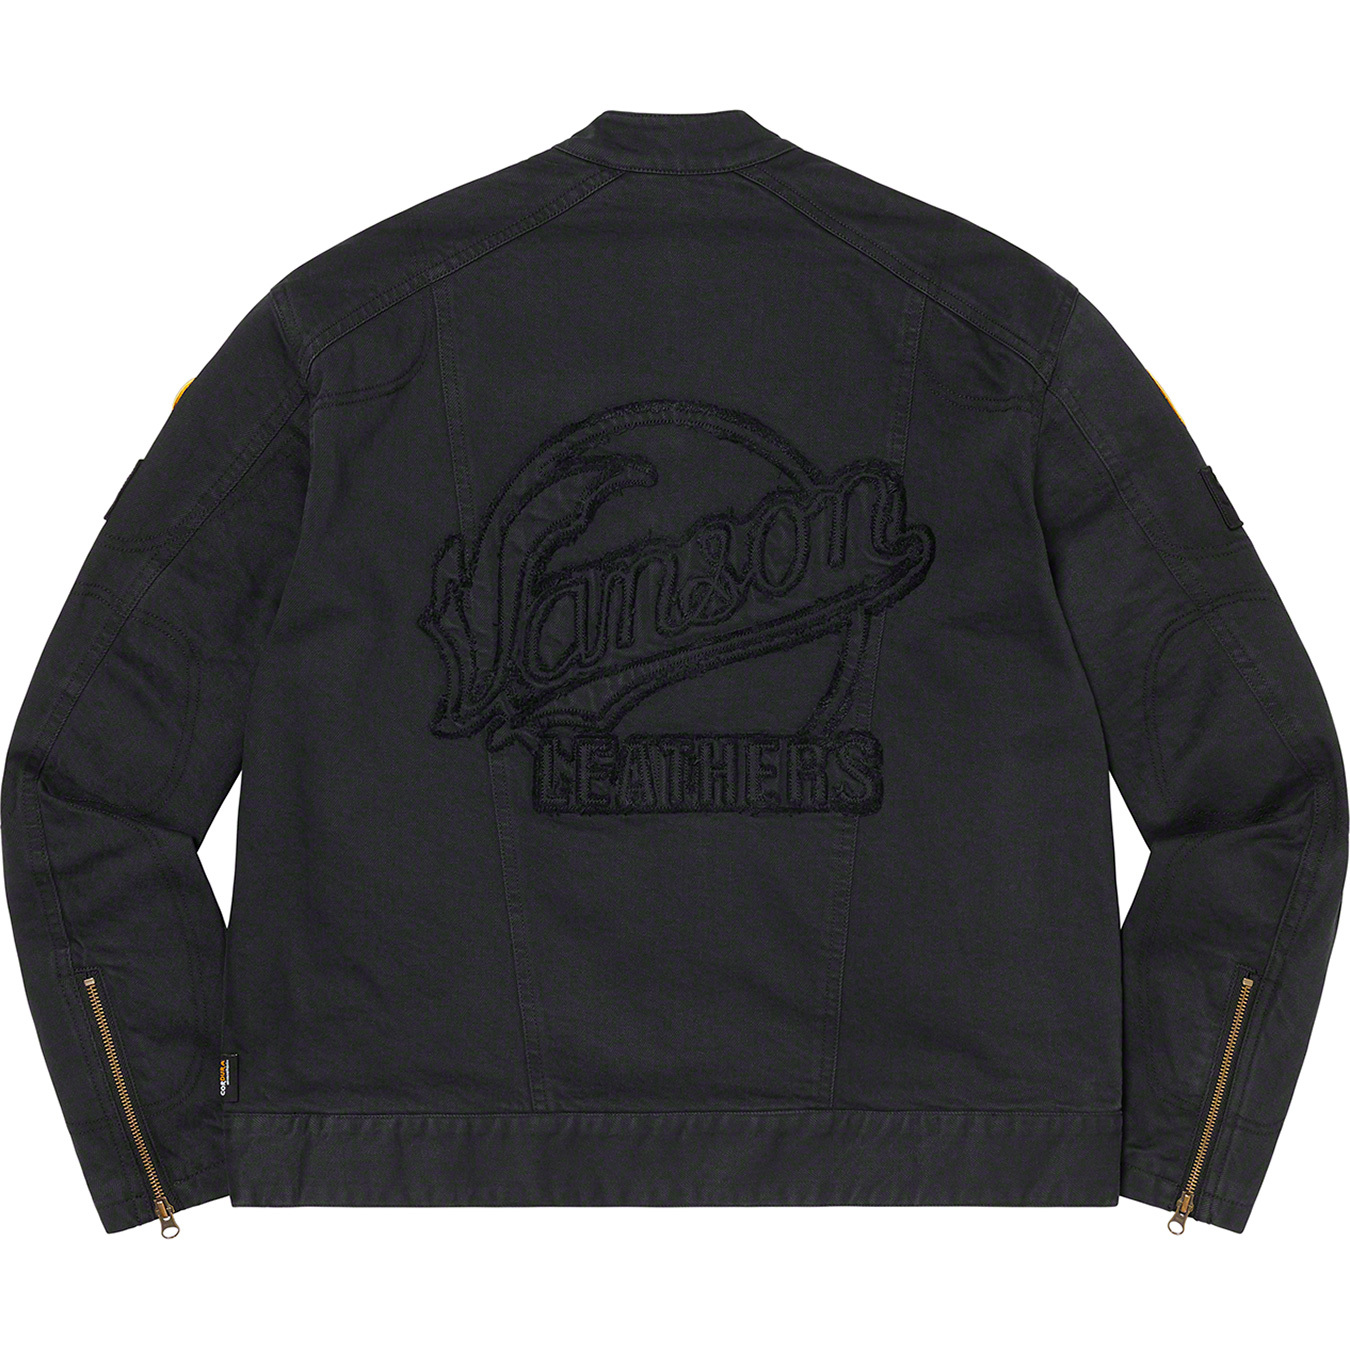 Supreme x Vanson Leather Cordura Denim Jacket Unisex Size S